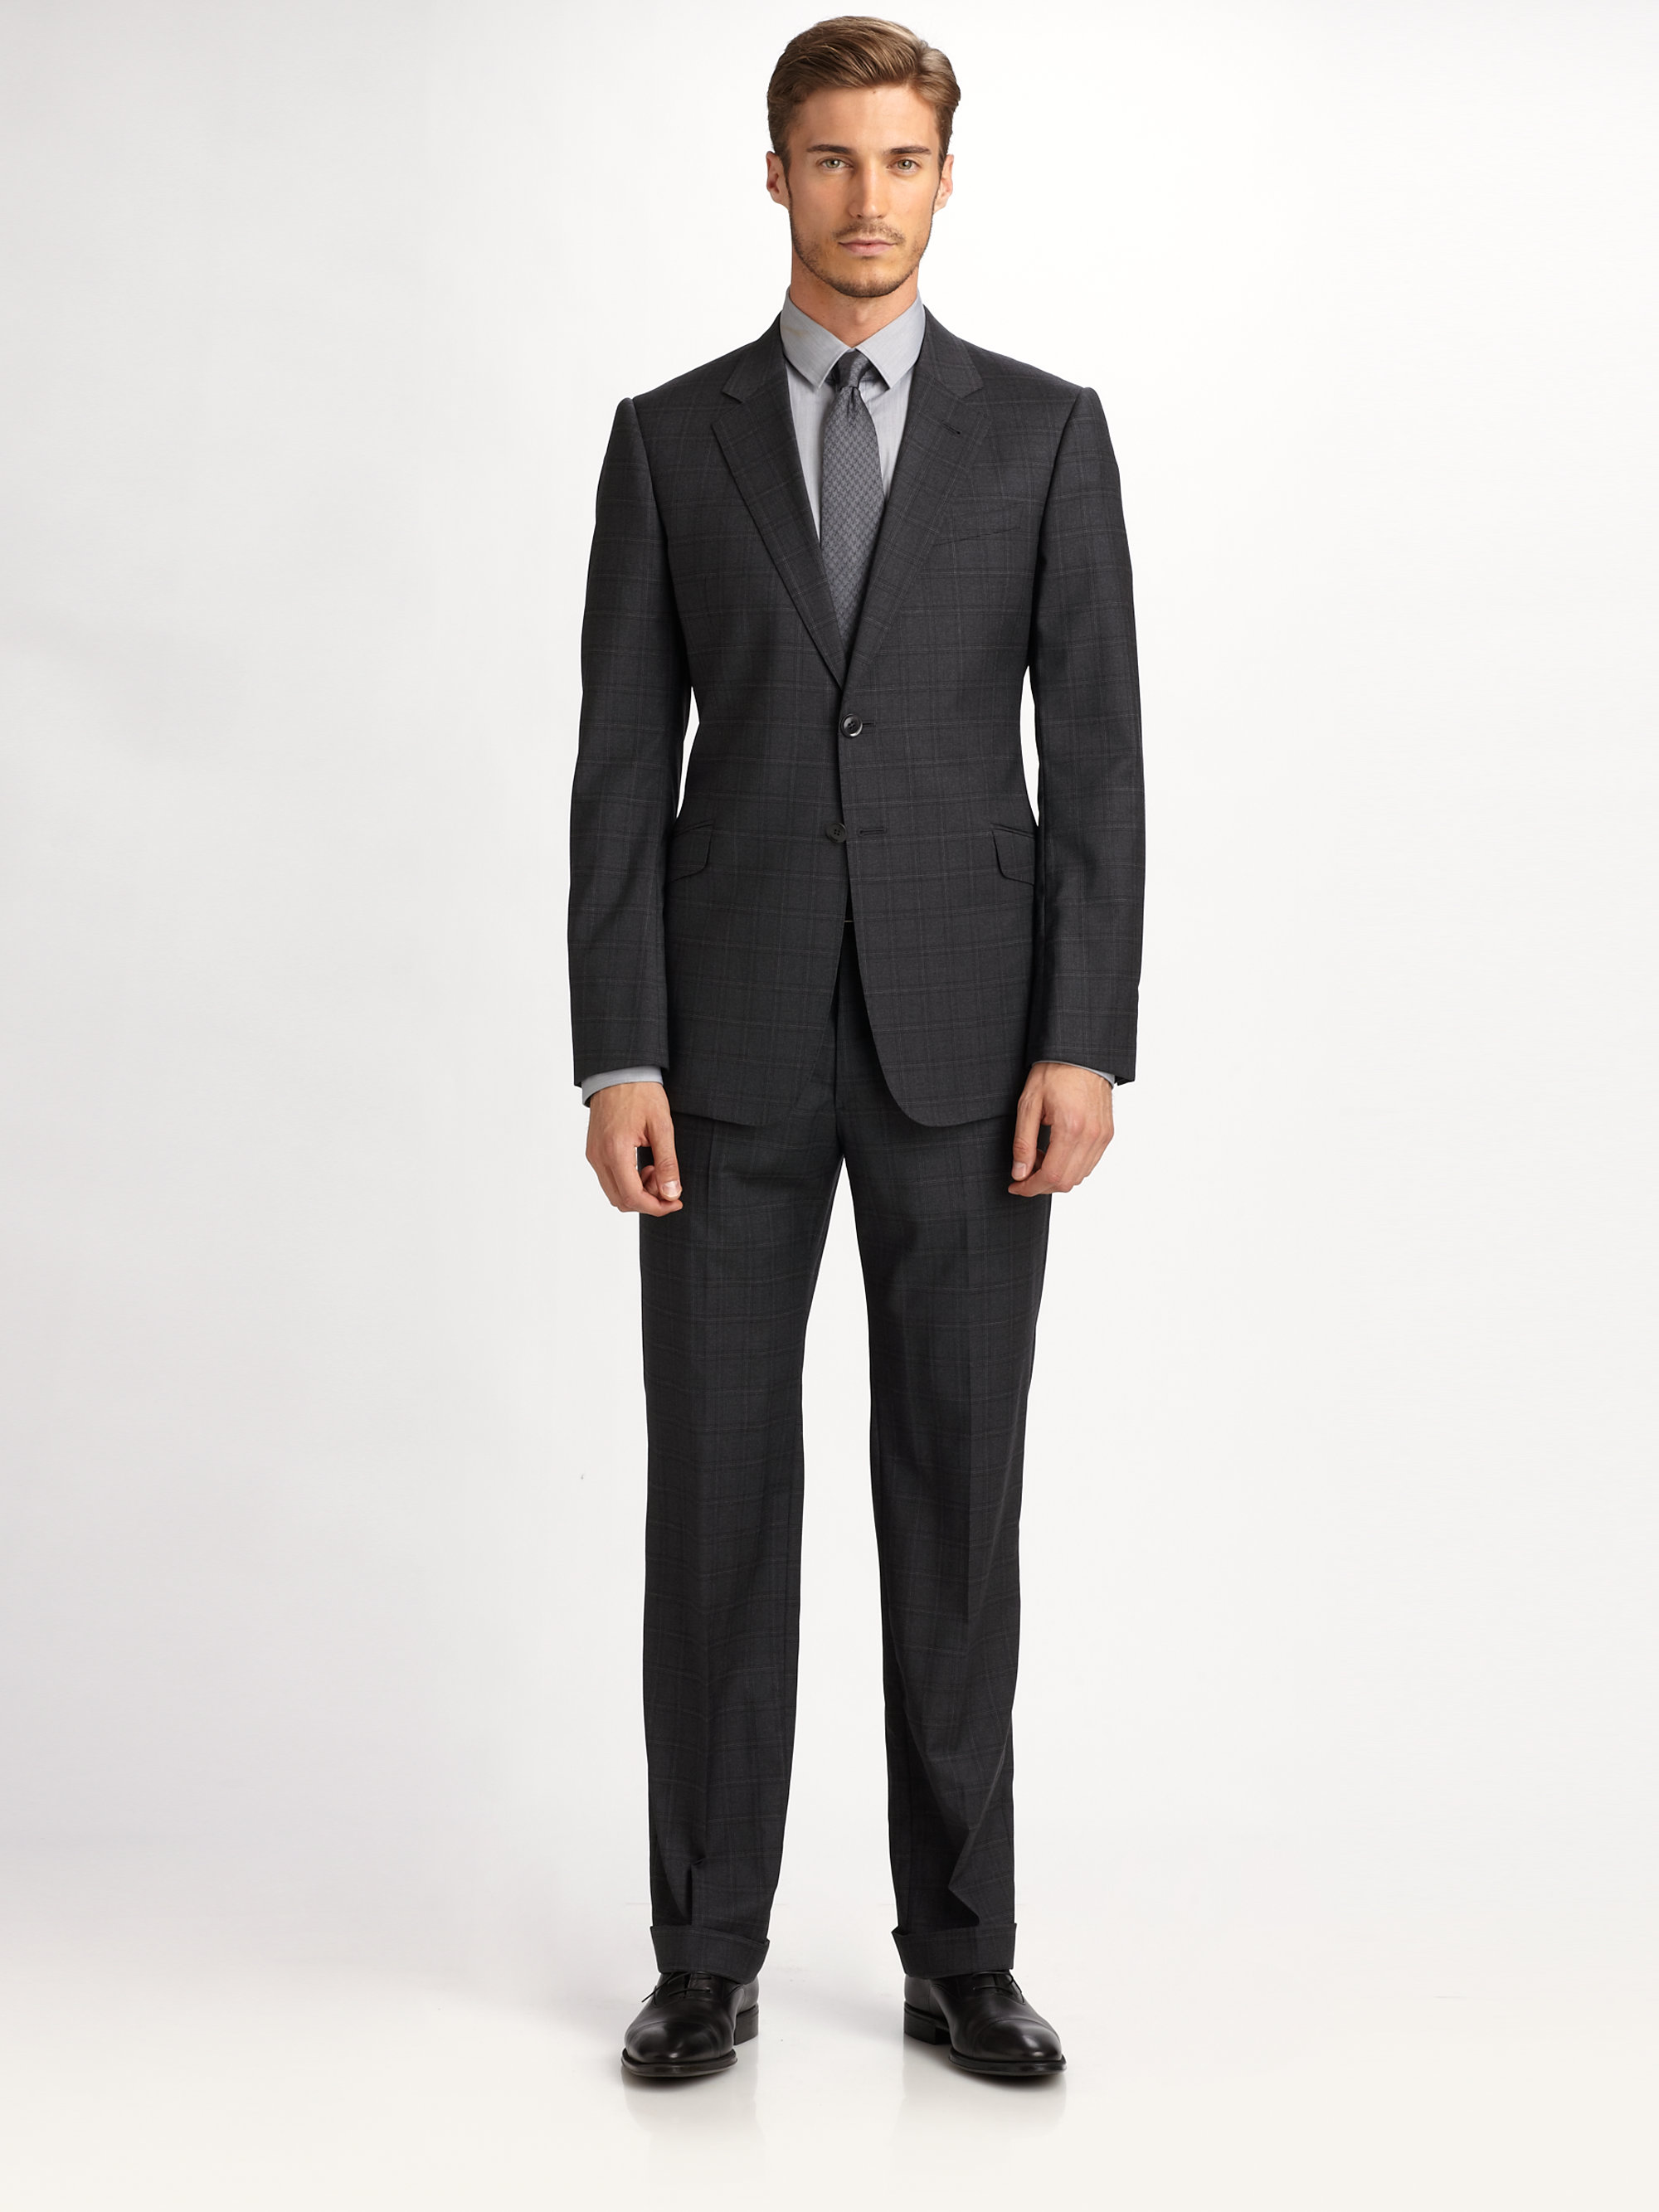 Armani Sartorial Model Plaid Suit in Navy-Plum (Black) for Men - Lyst